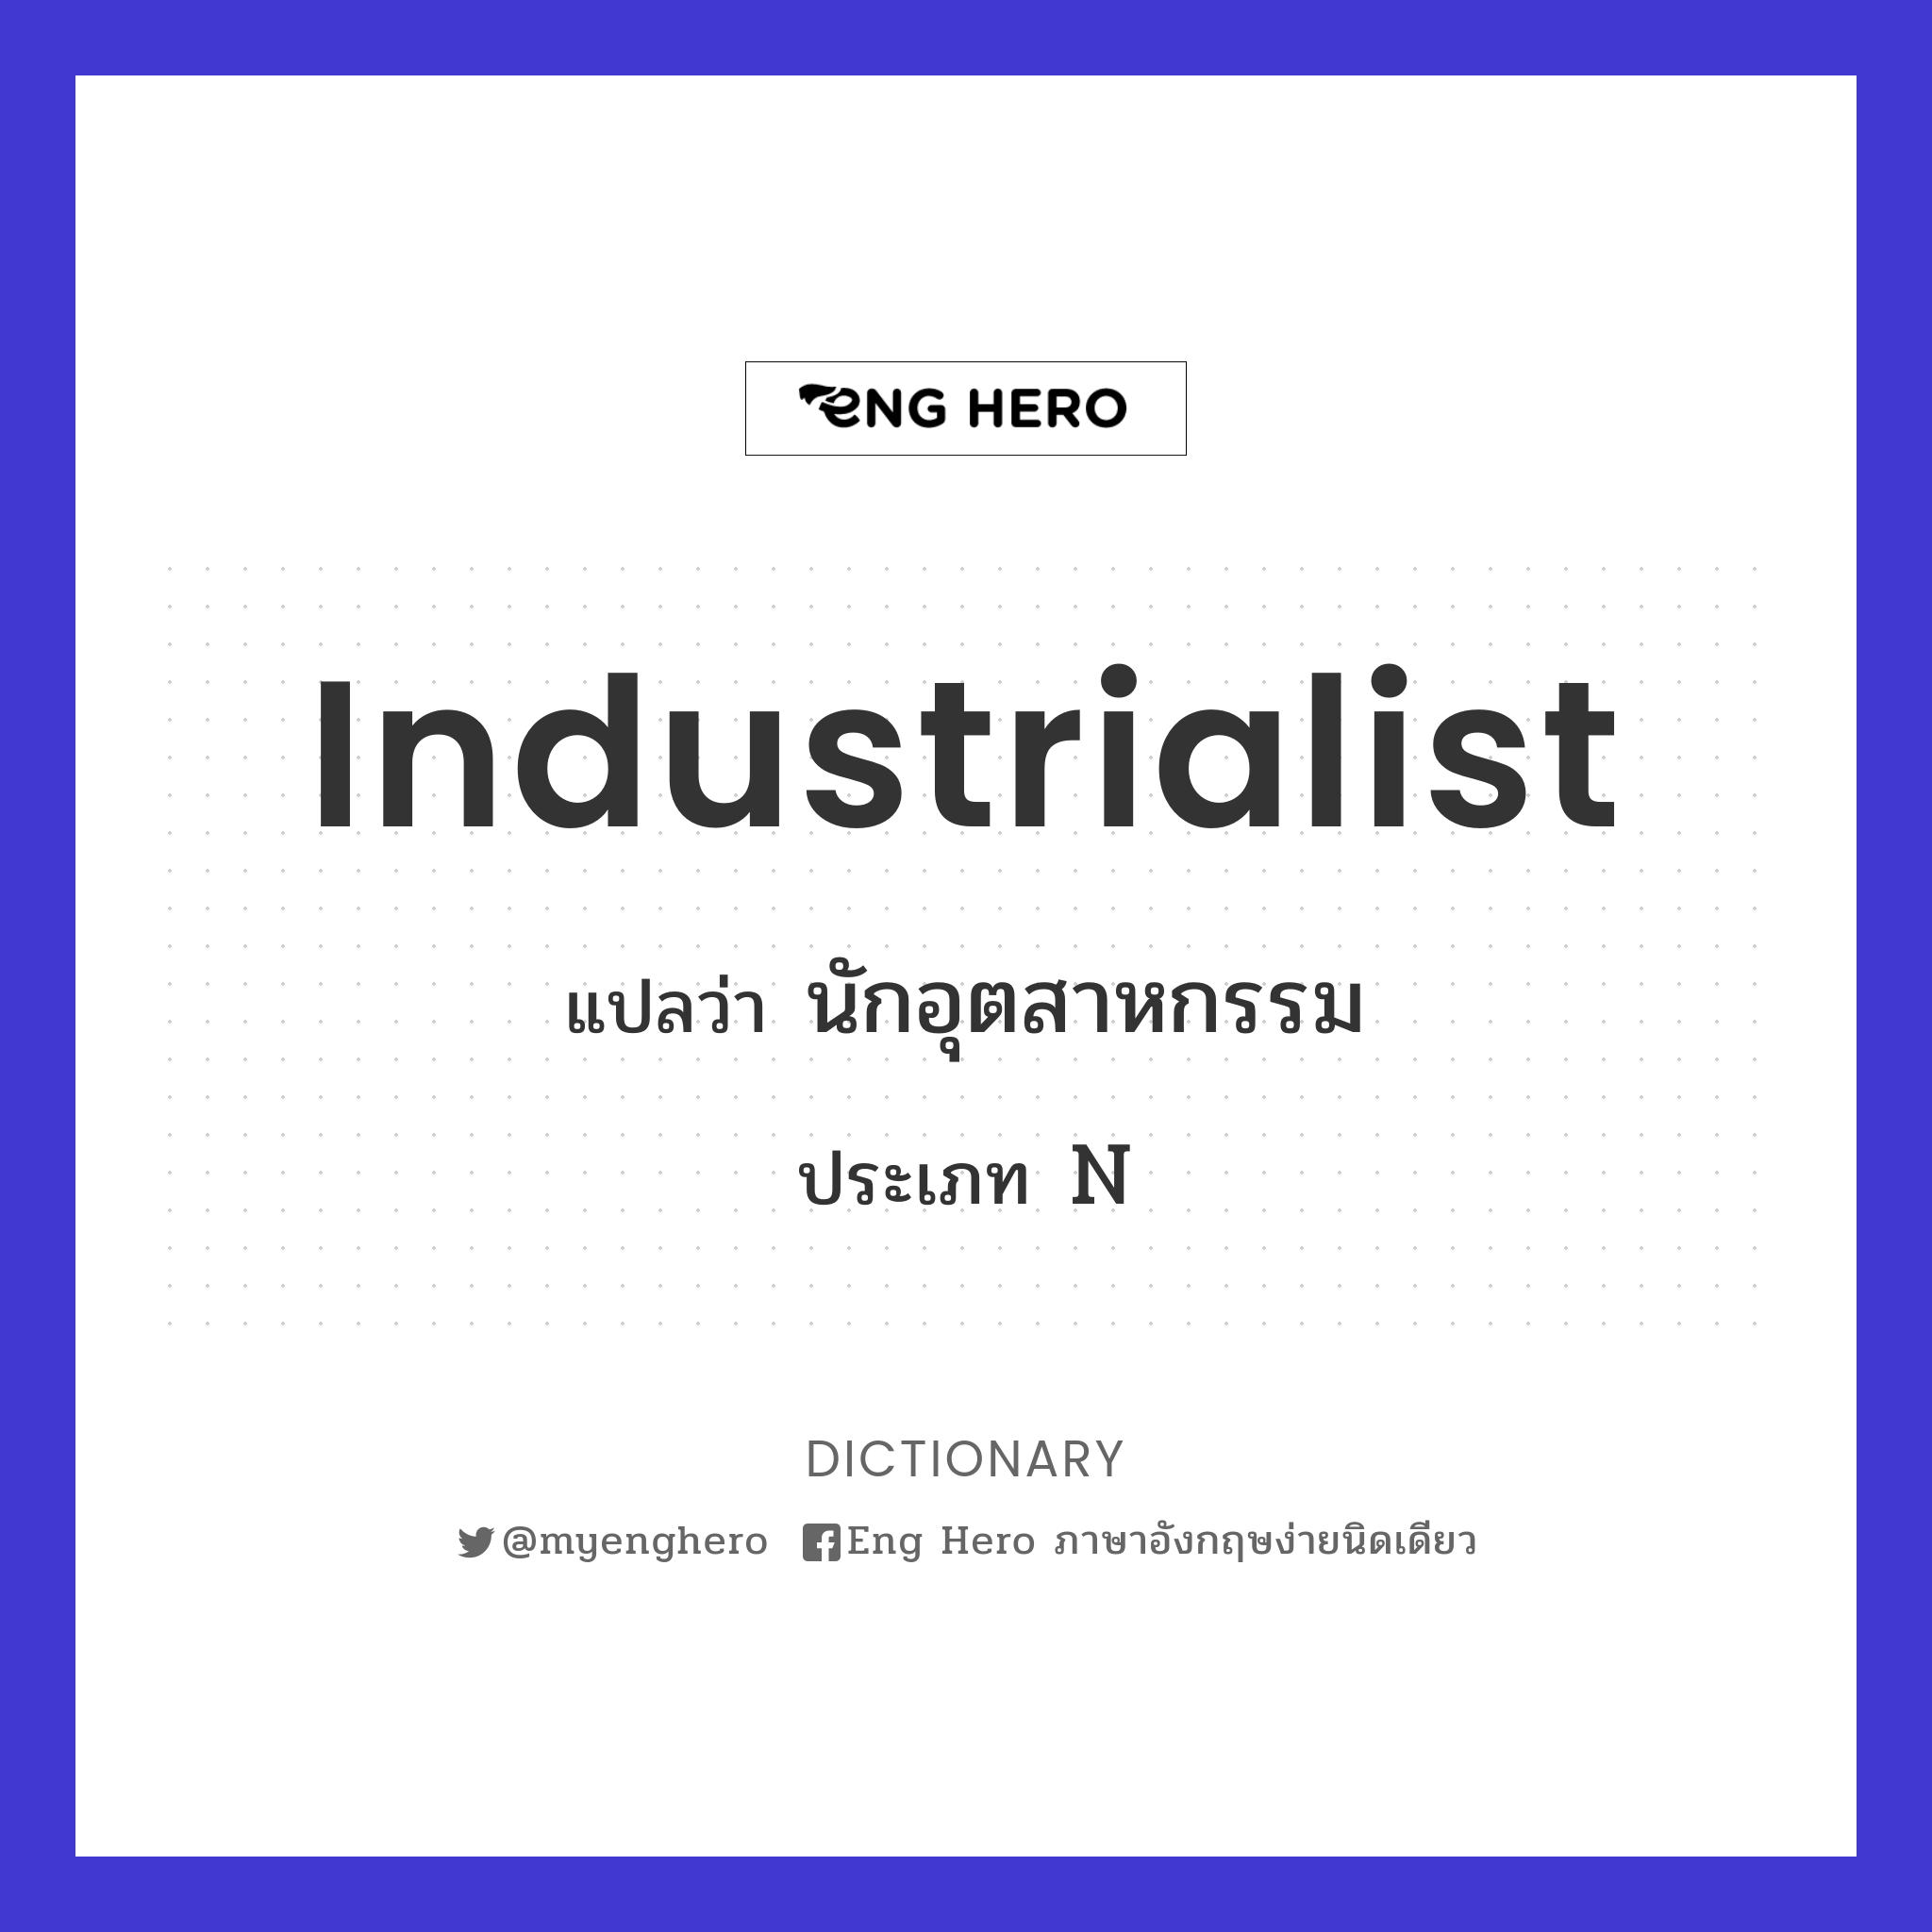 industrialist